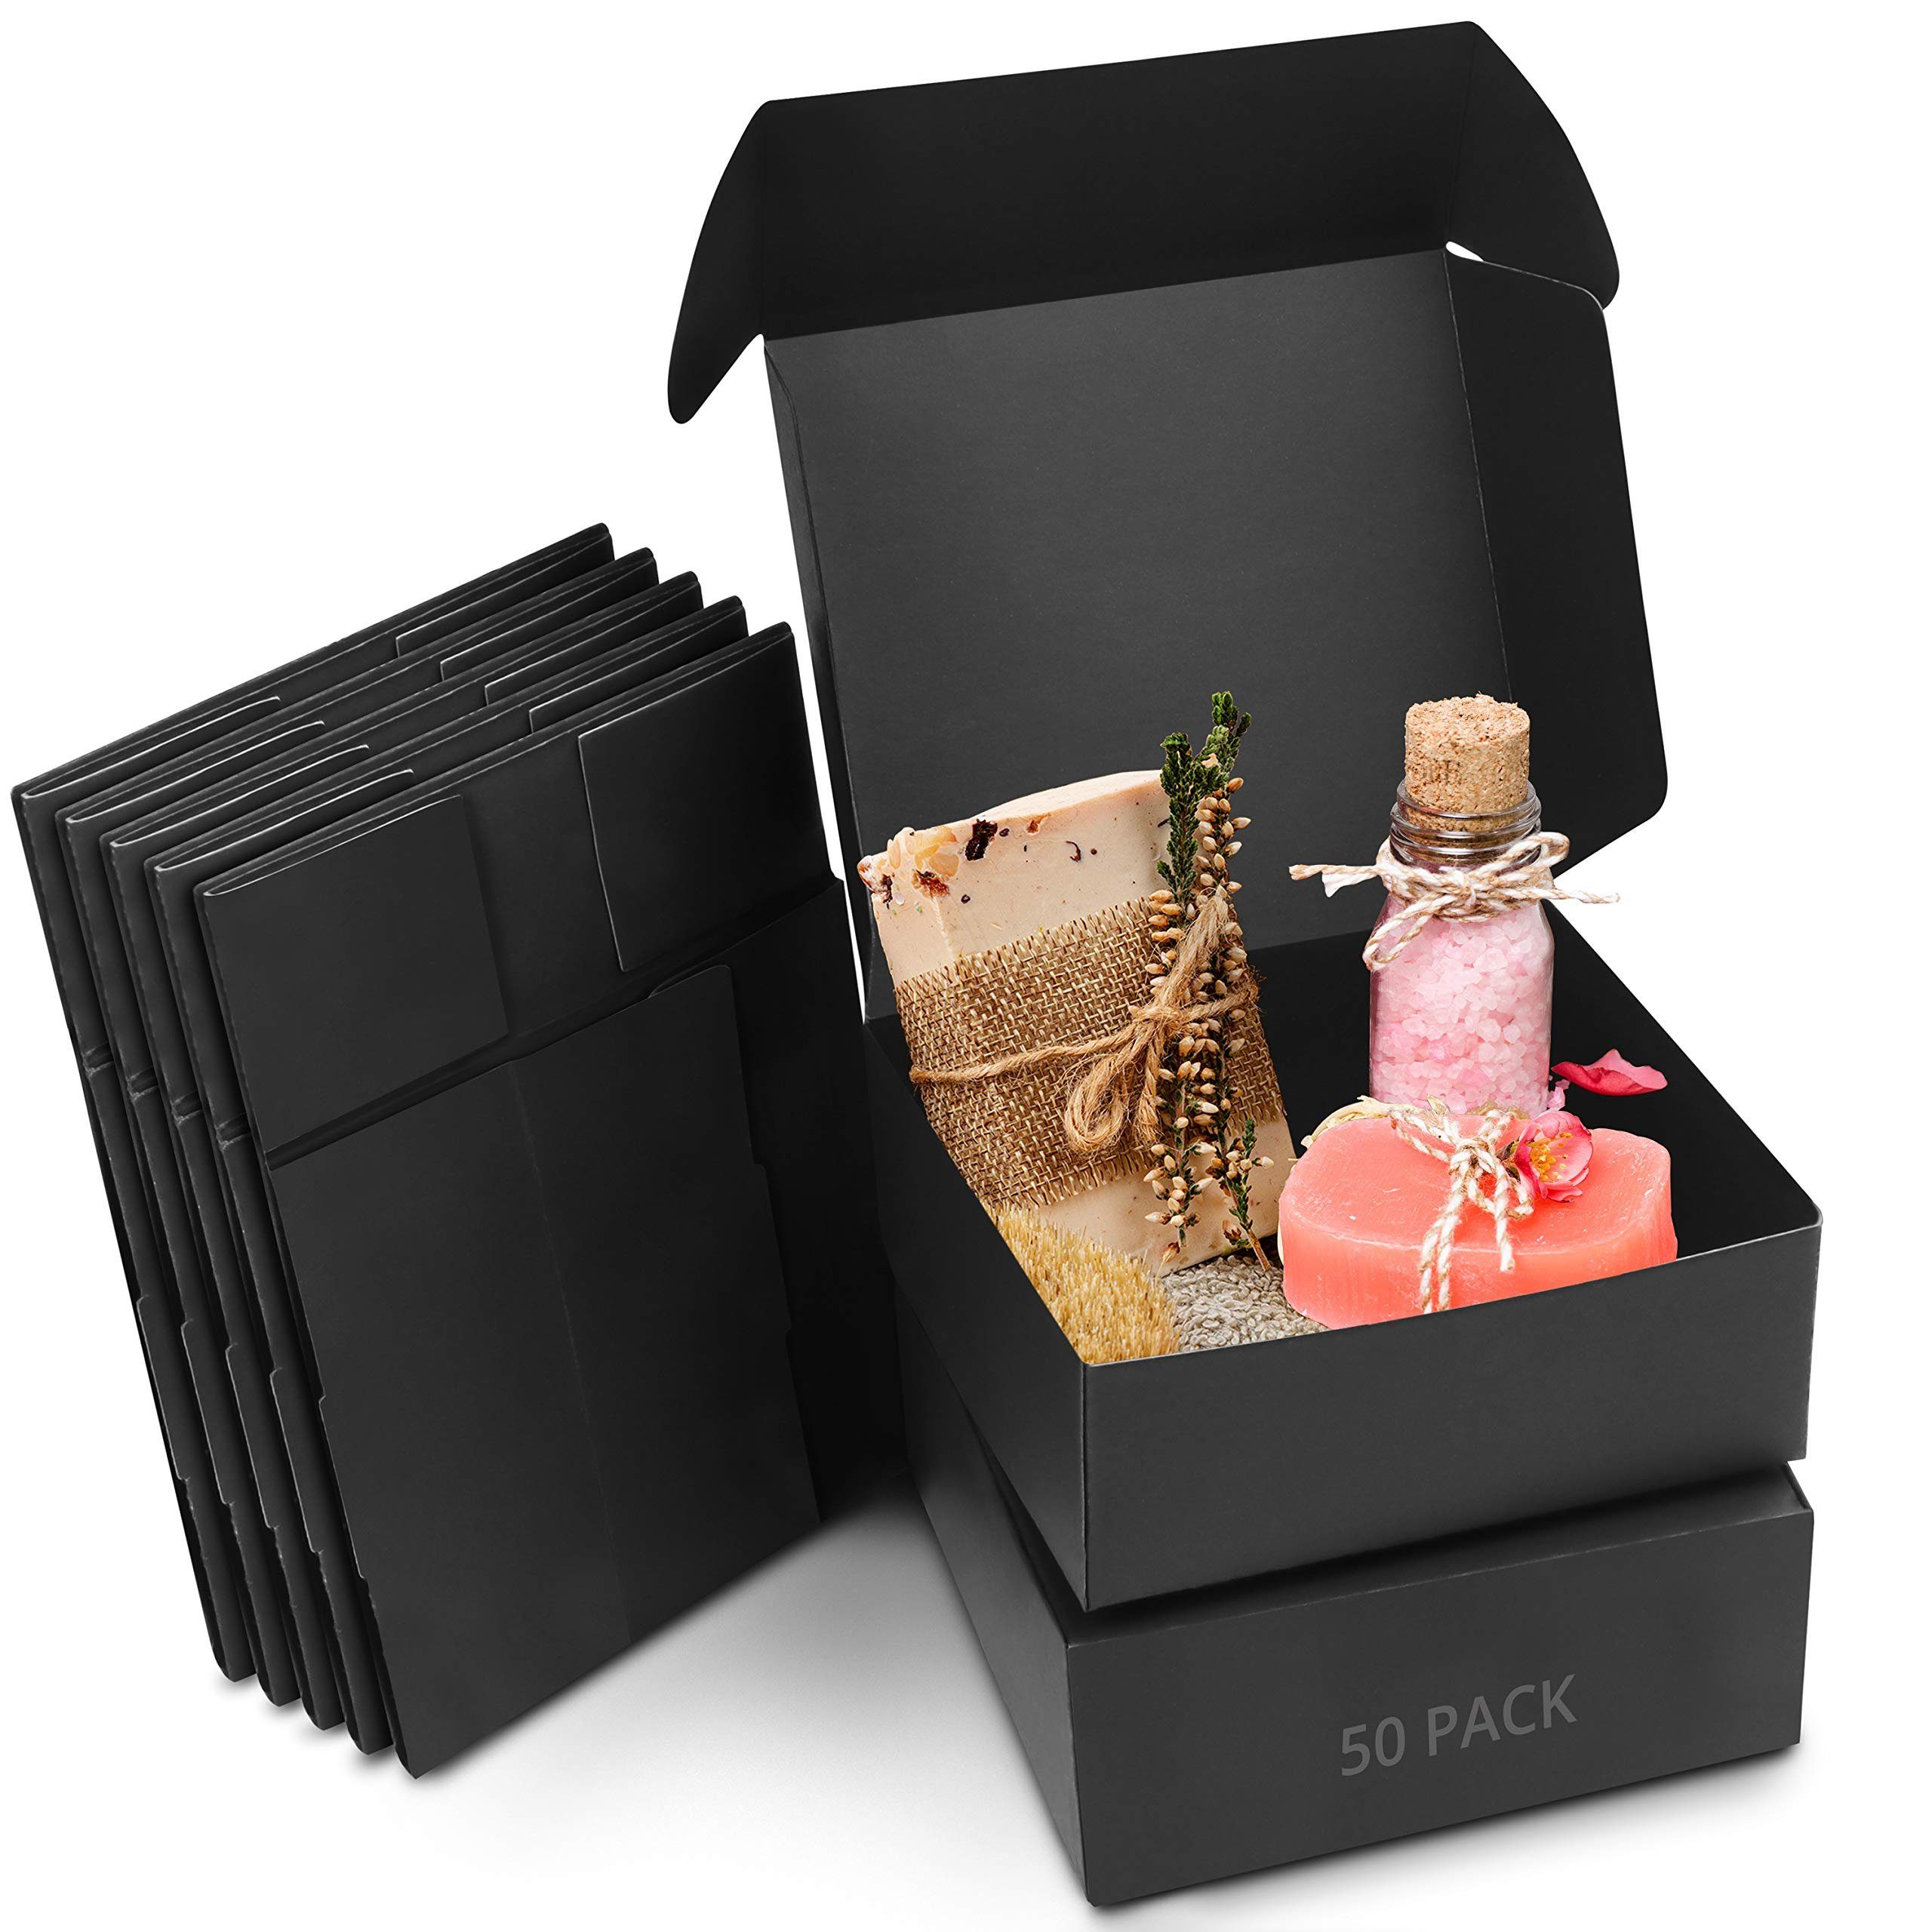 Kurtzy Geschenkbox Schwarze Geschenkboxen (50 Stück) - 12x12x5cm, Black Gift Boxes (50 pcs) - 12x12x5cm Cardboard Boxes